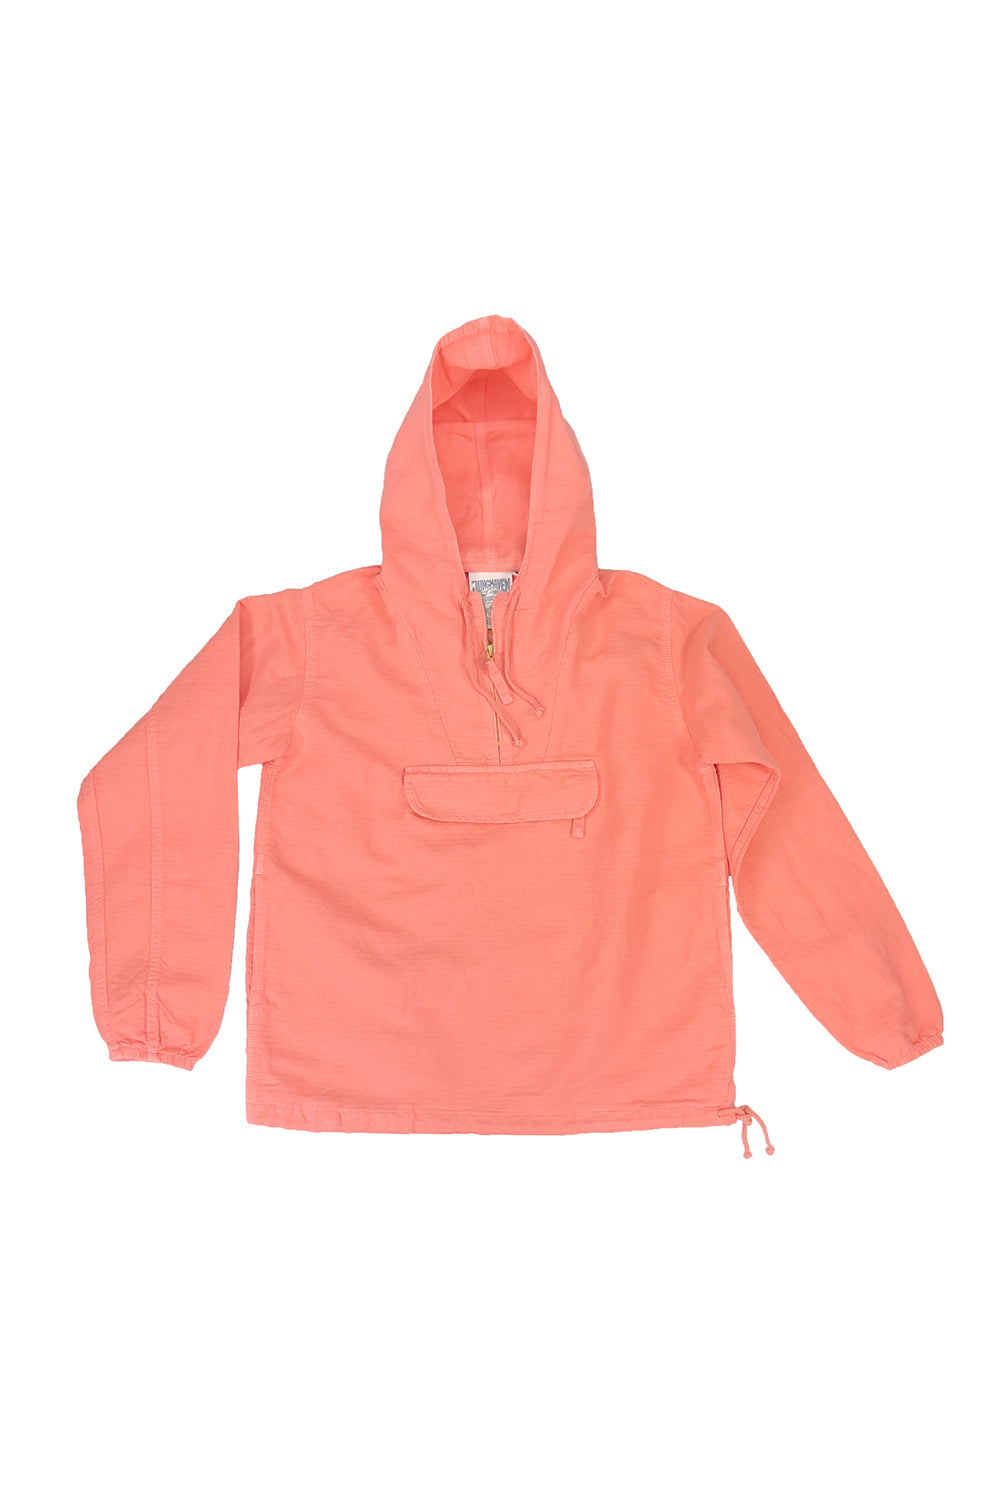 Shoreline Anorak Jacket | Jungmaven Hemp Clothing & Accessories / Color: Pink Salmon